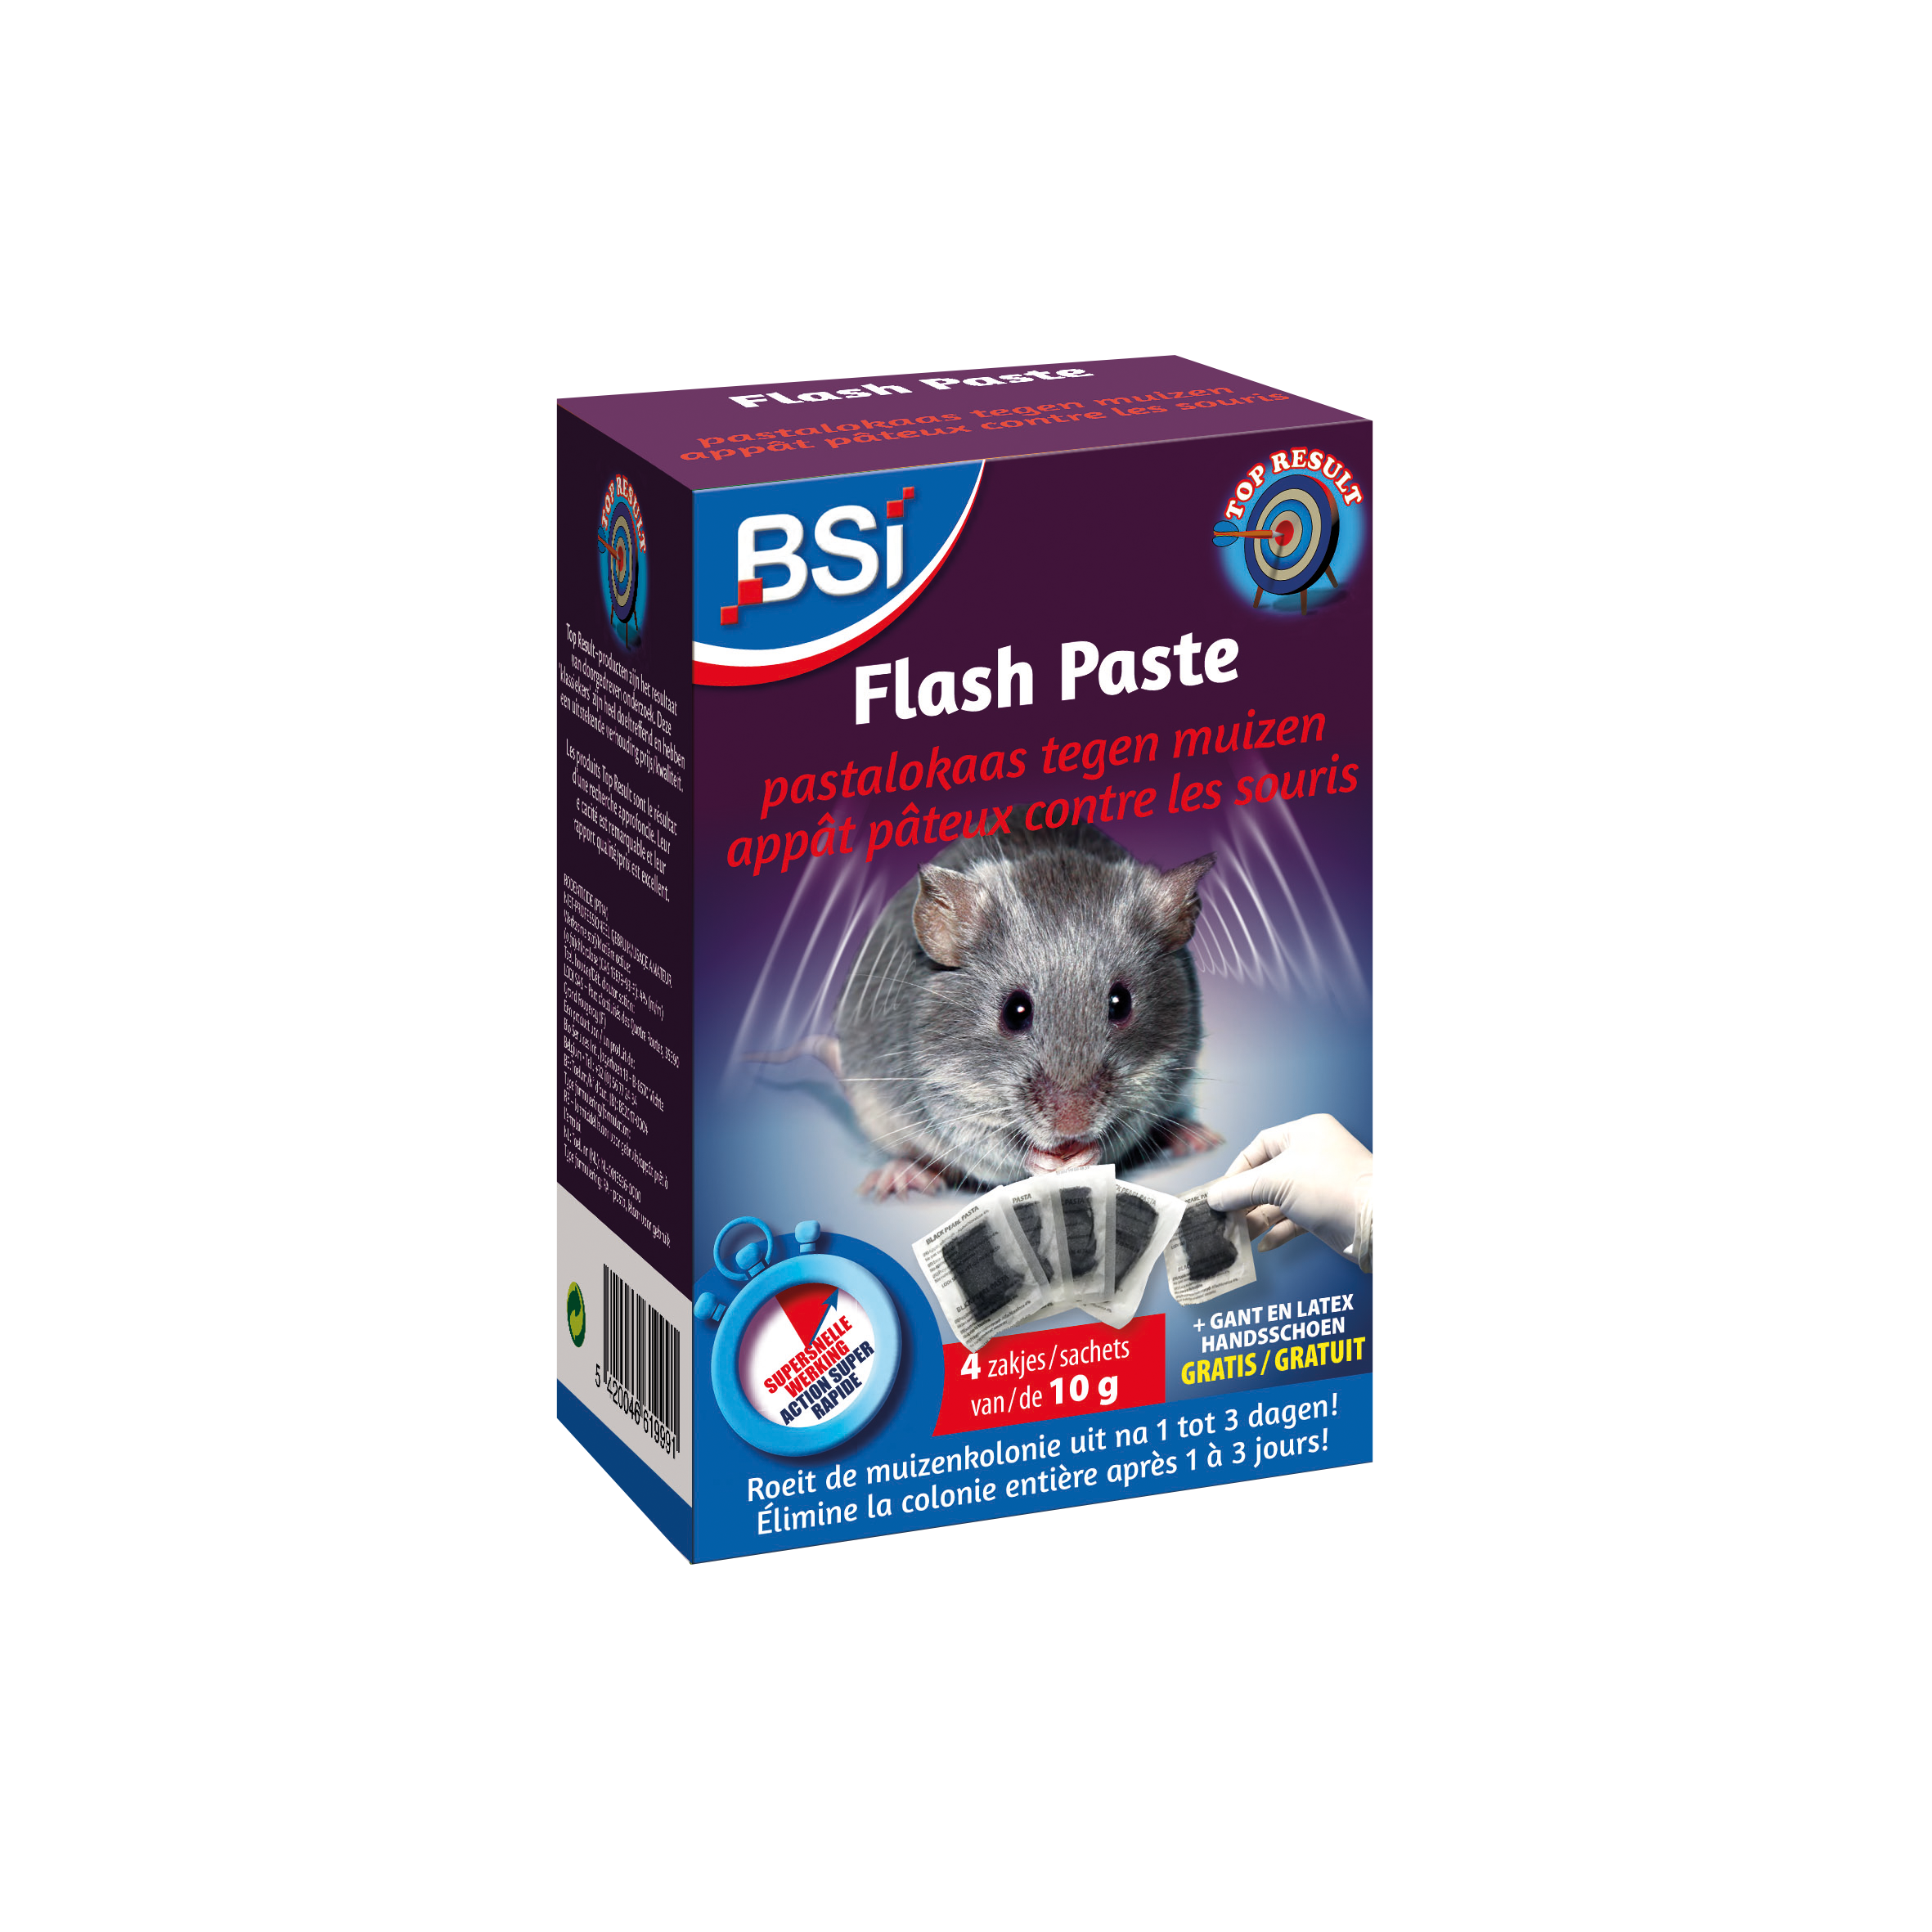 BSI Flash Paste 4 x 10 g image